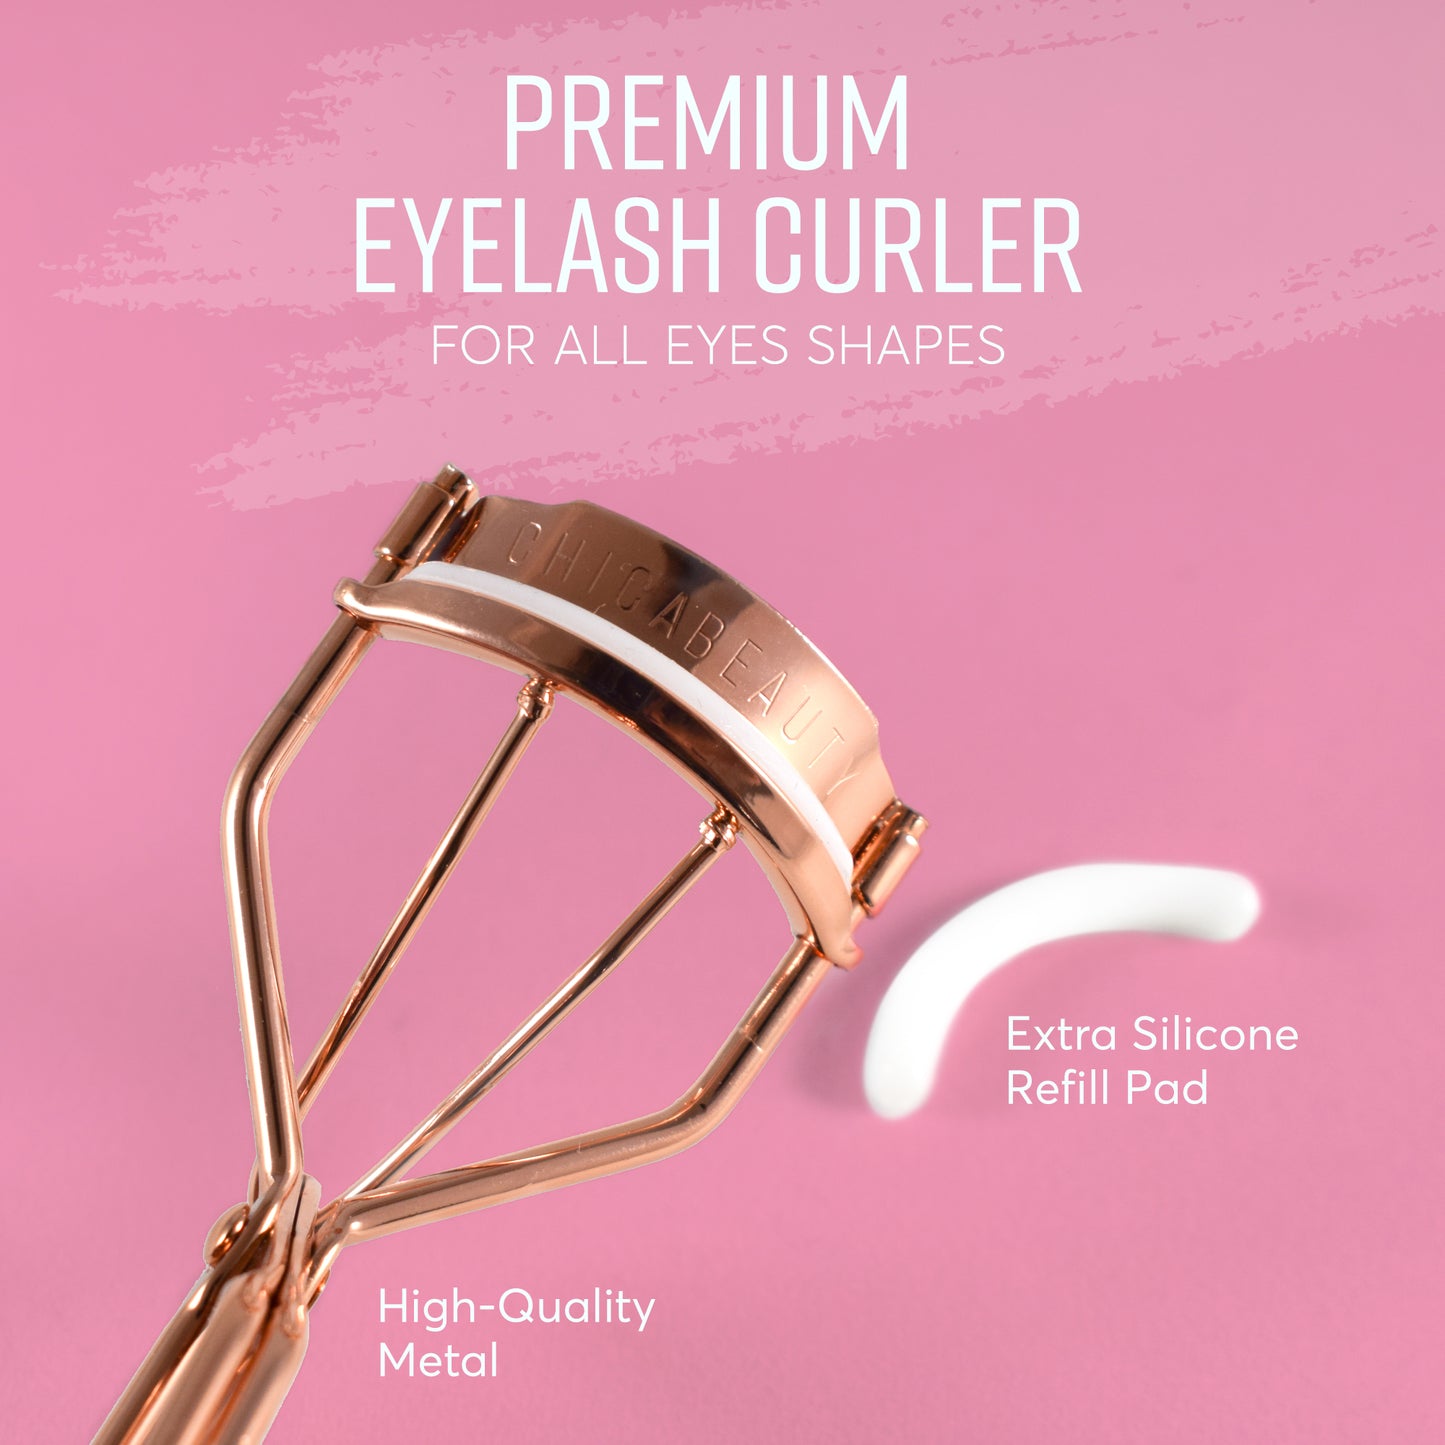 THE Eyelash Curler